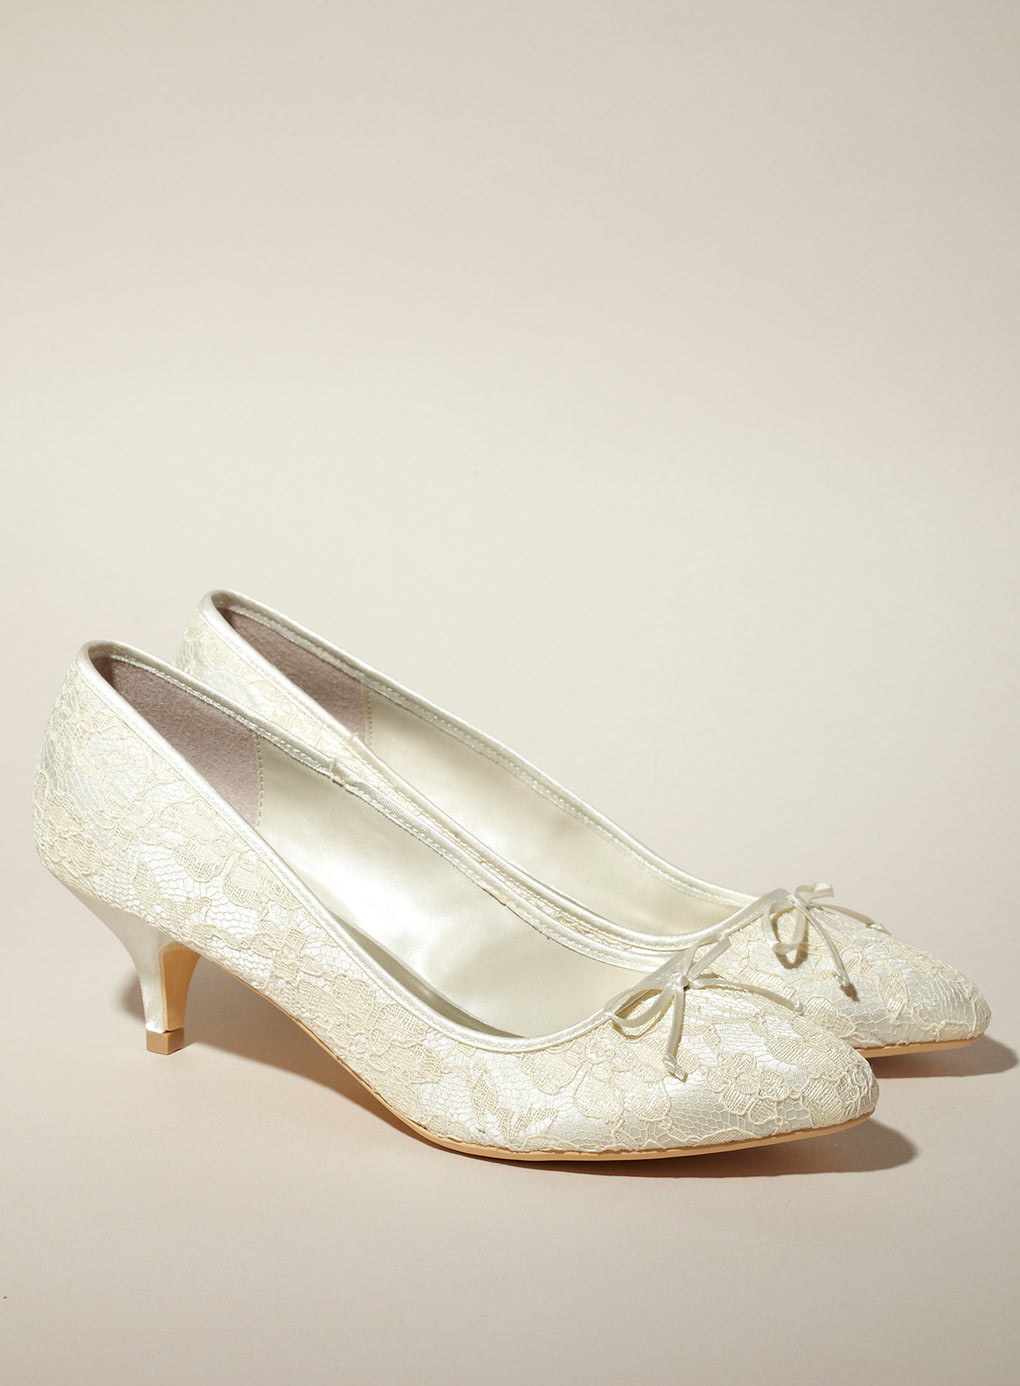 Cheap Ivory Wedding Shoes
 Cheap ivory wedding shoes Florida Magazine